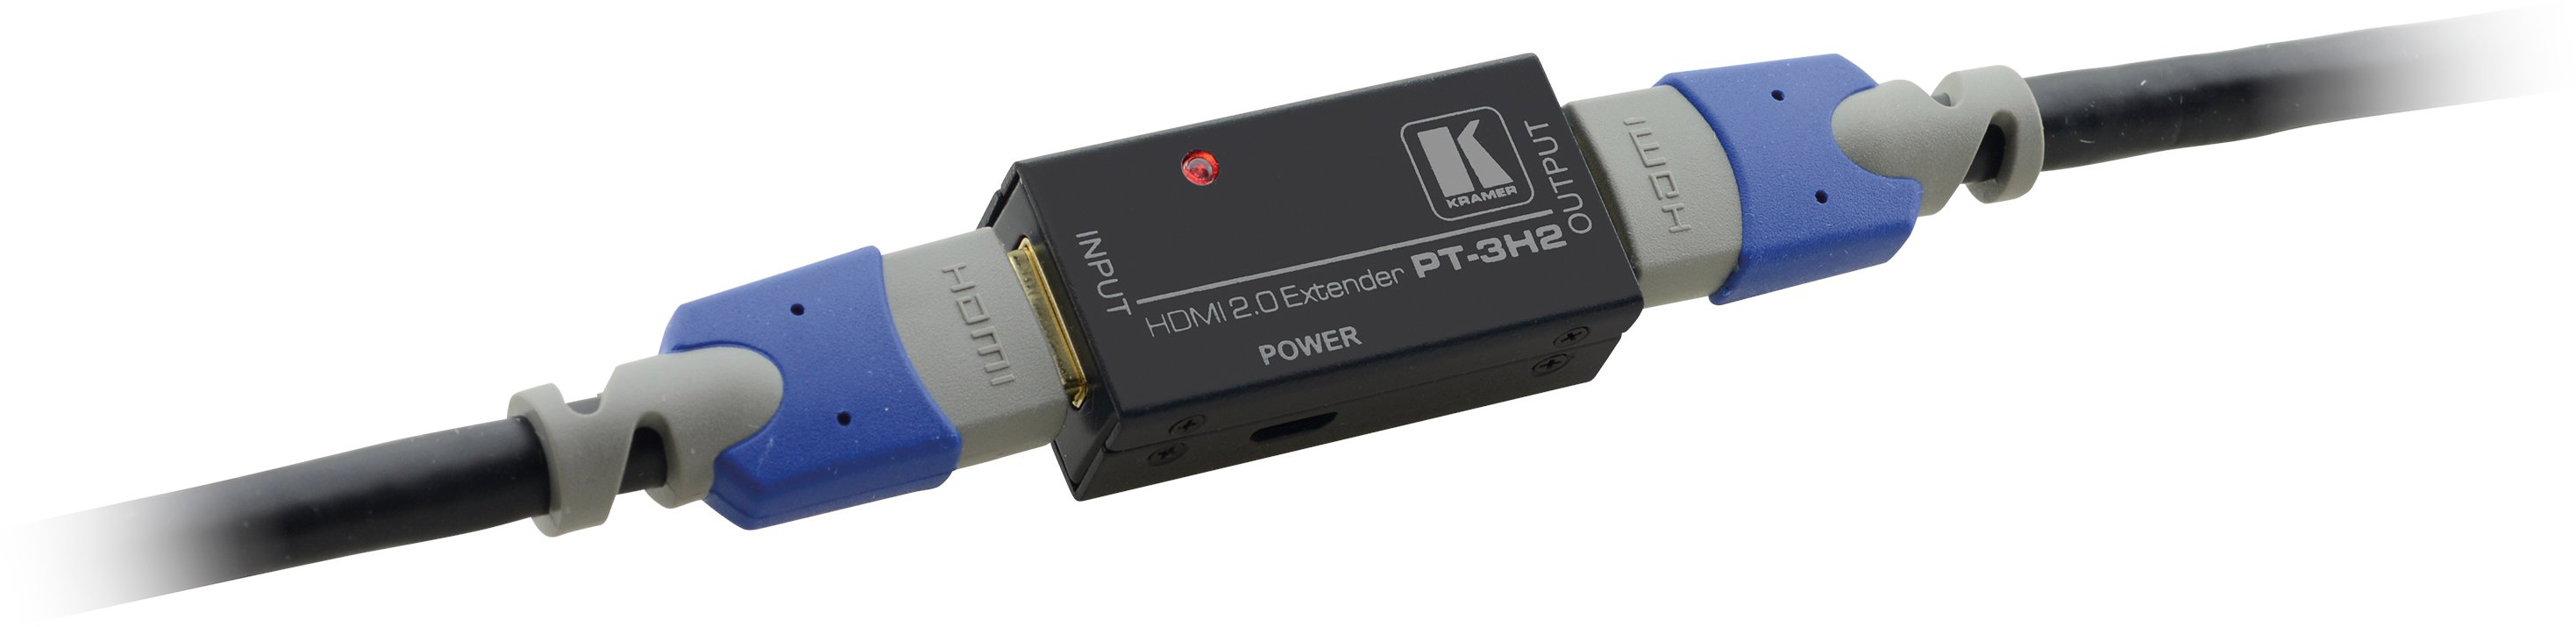 Kramer PT-3H2 4K HDR HDMI Extender